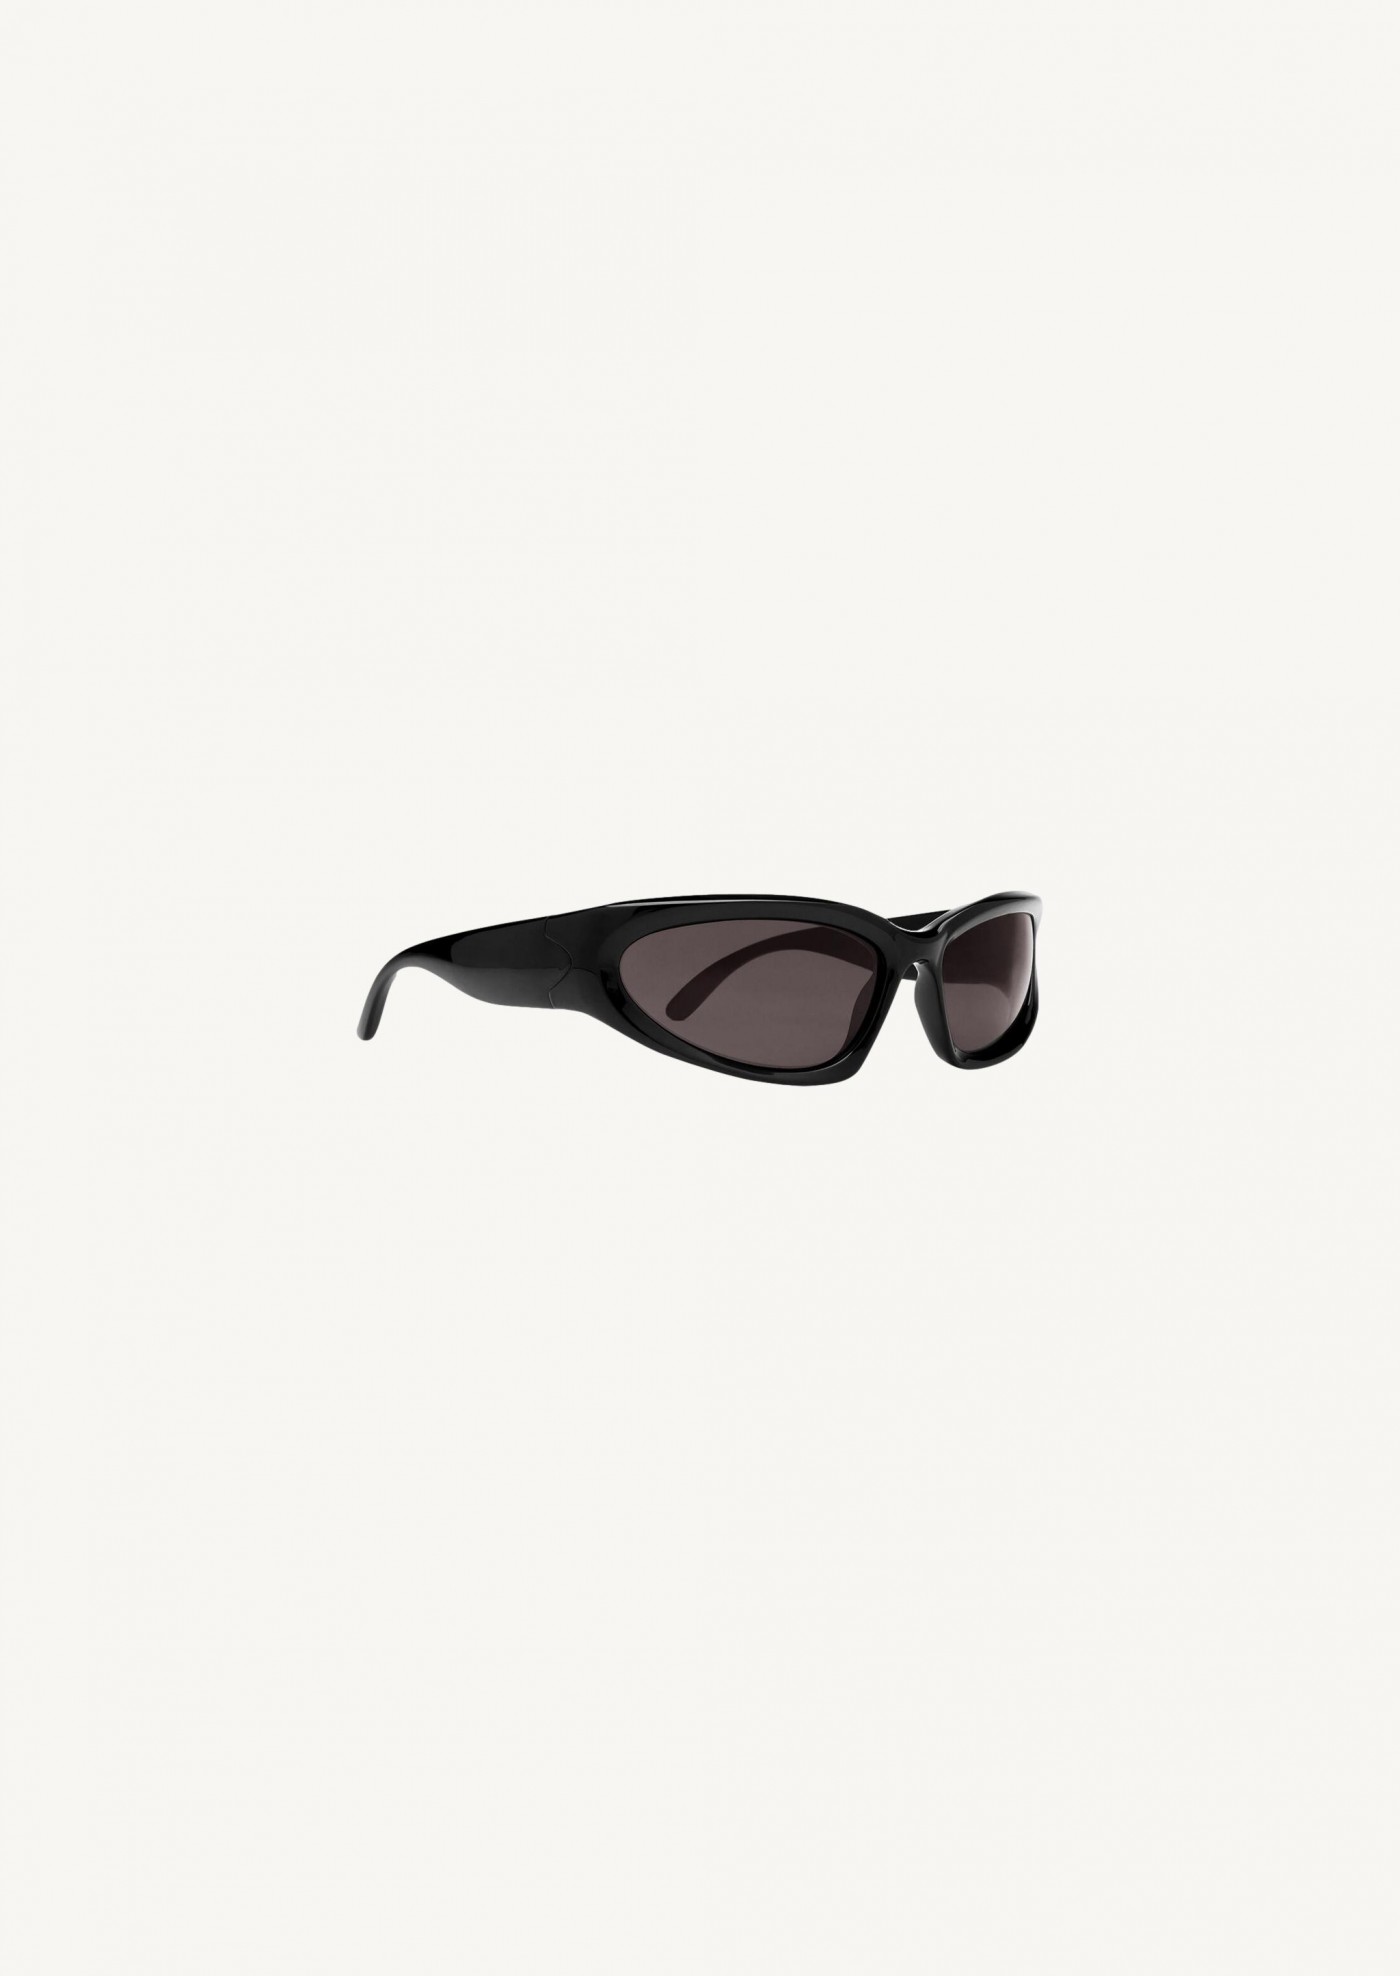 swift oval sunglasses in black